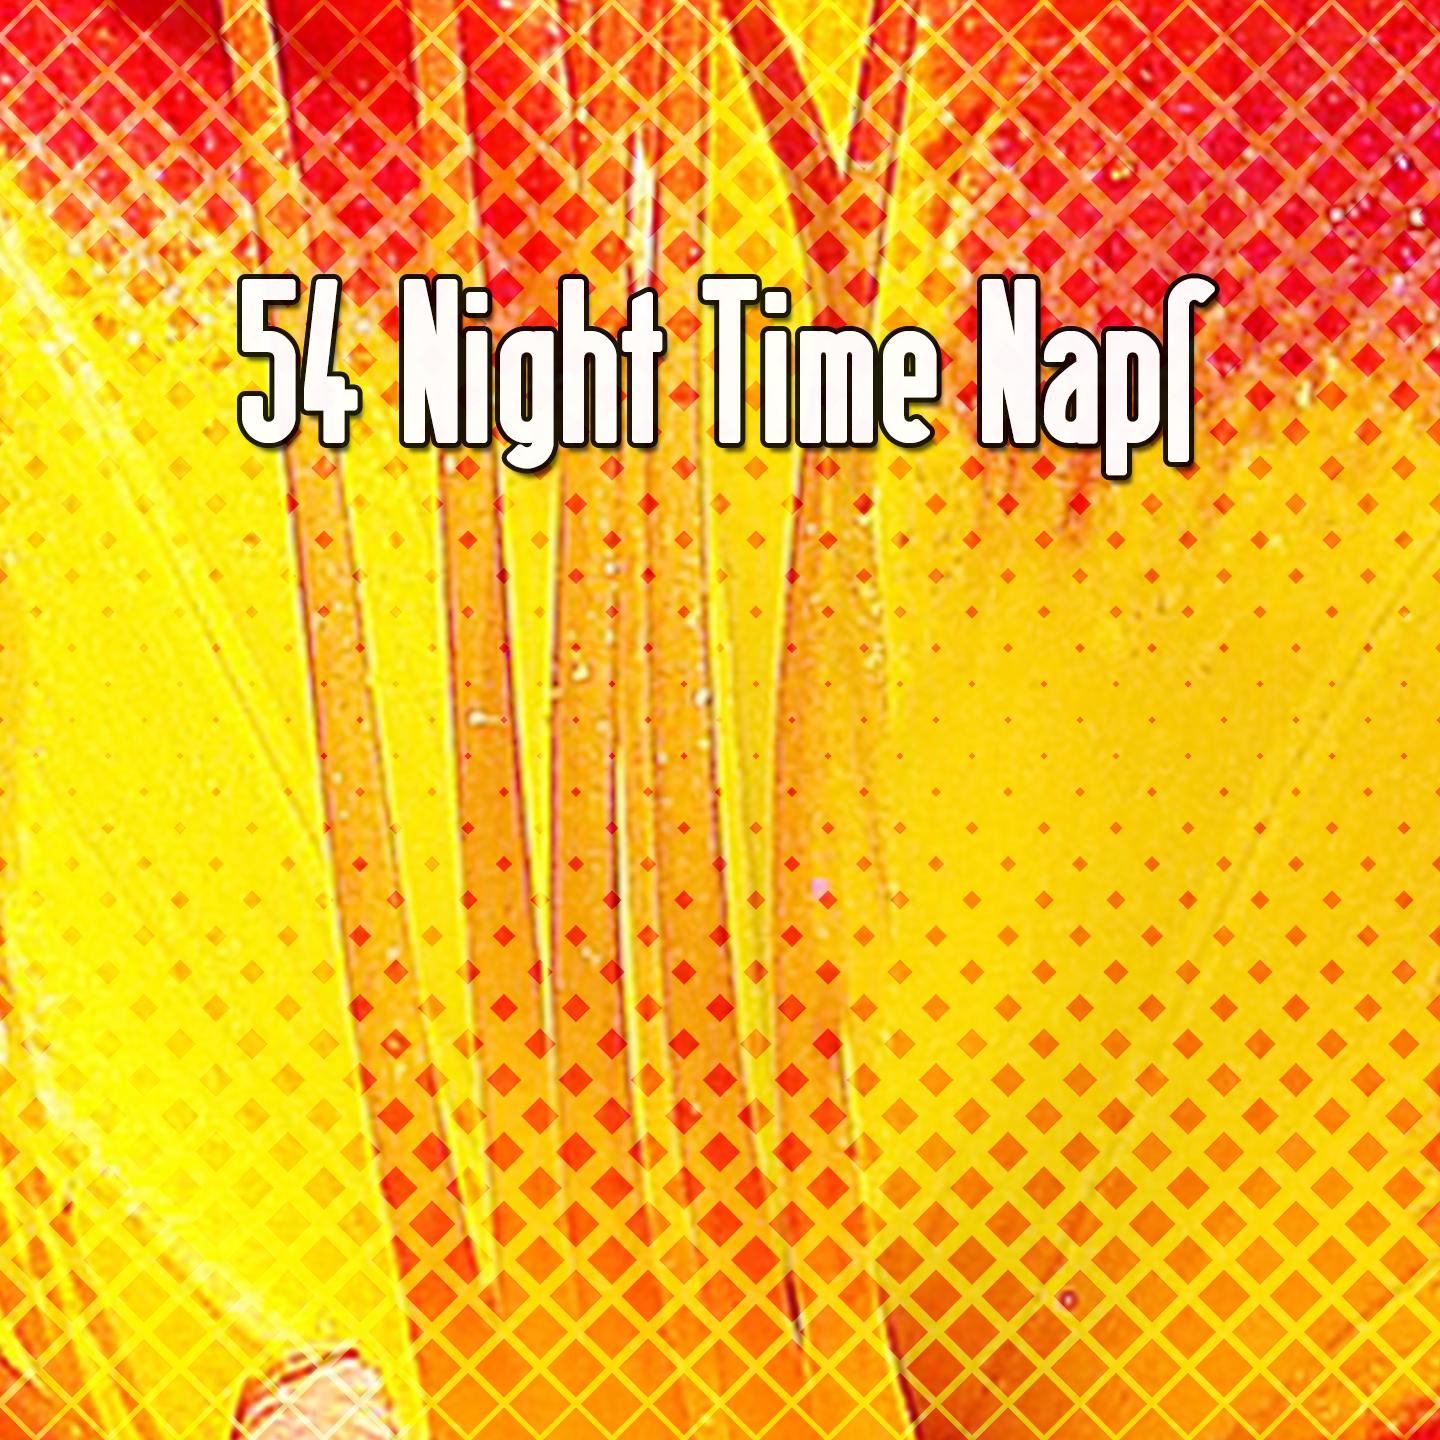 54 Night Time Naps